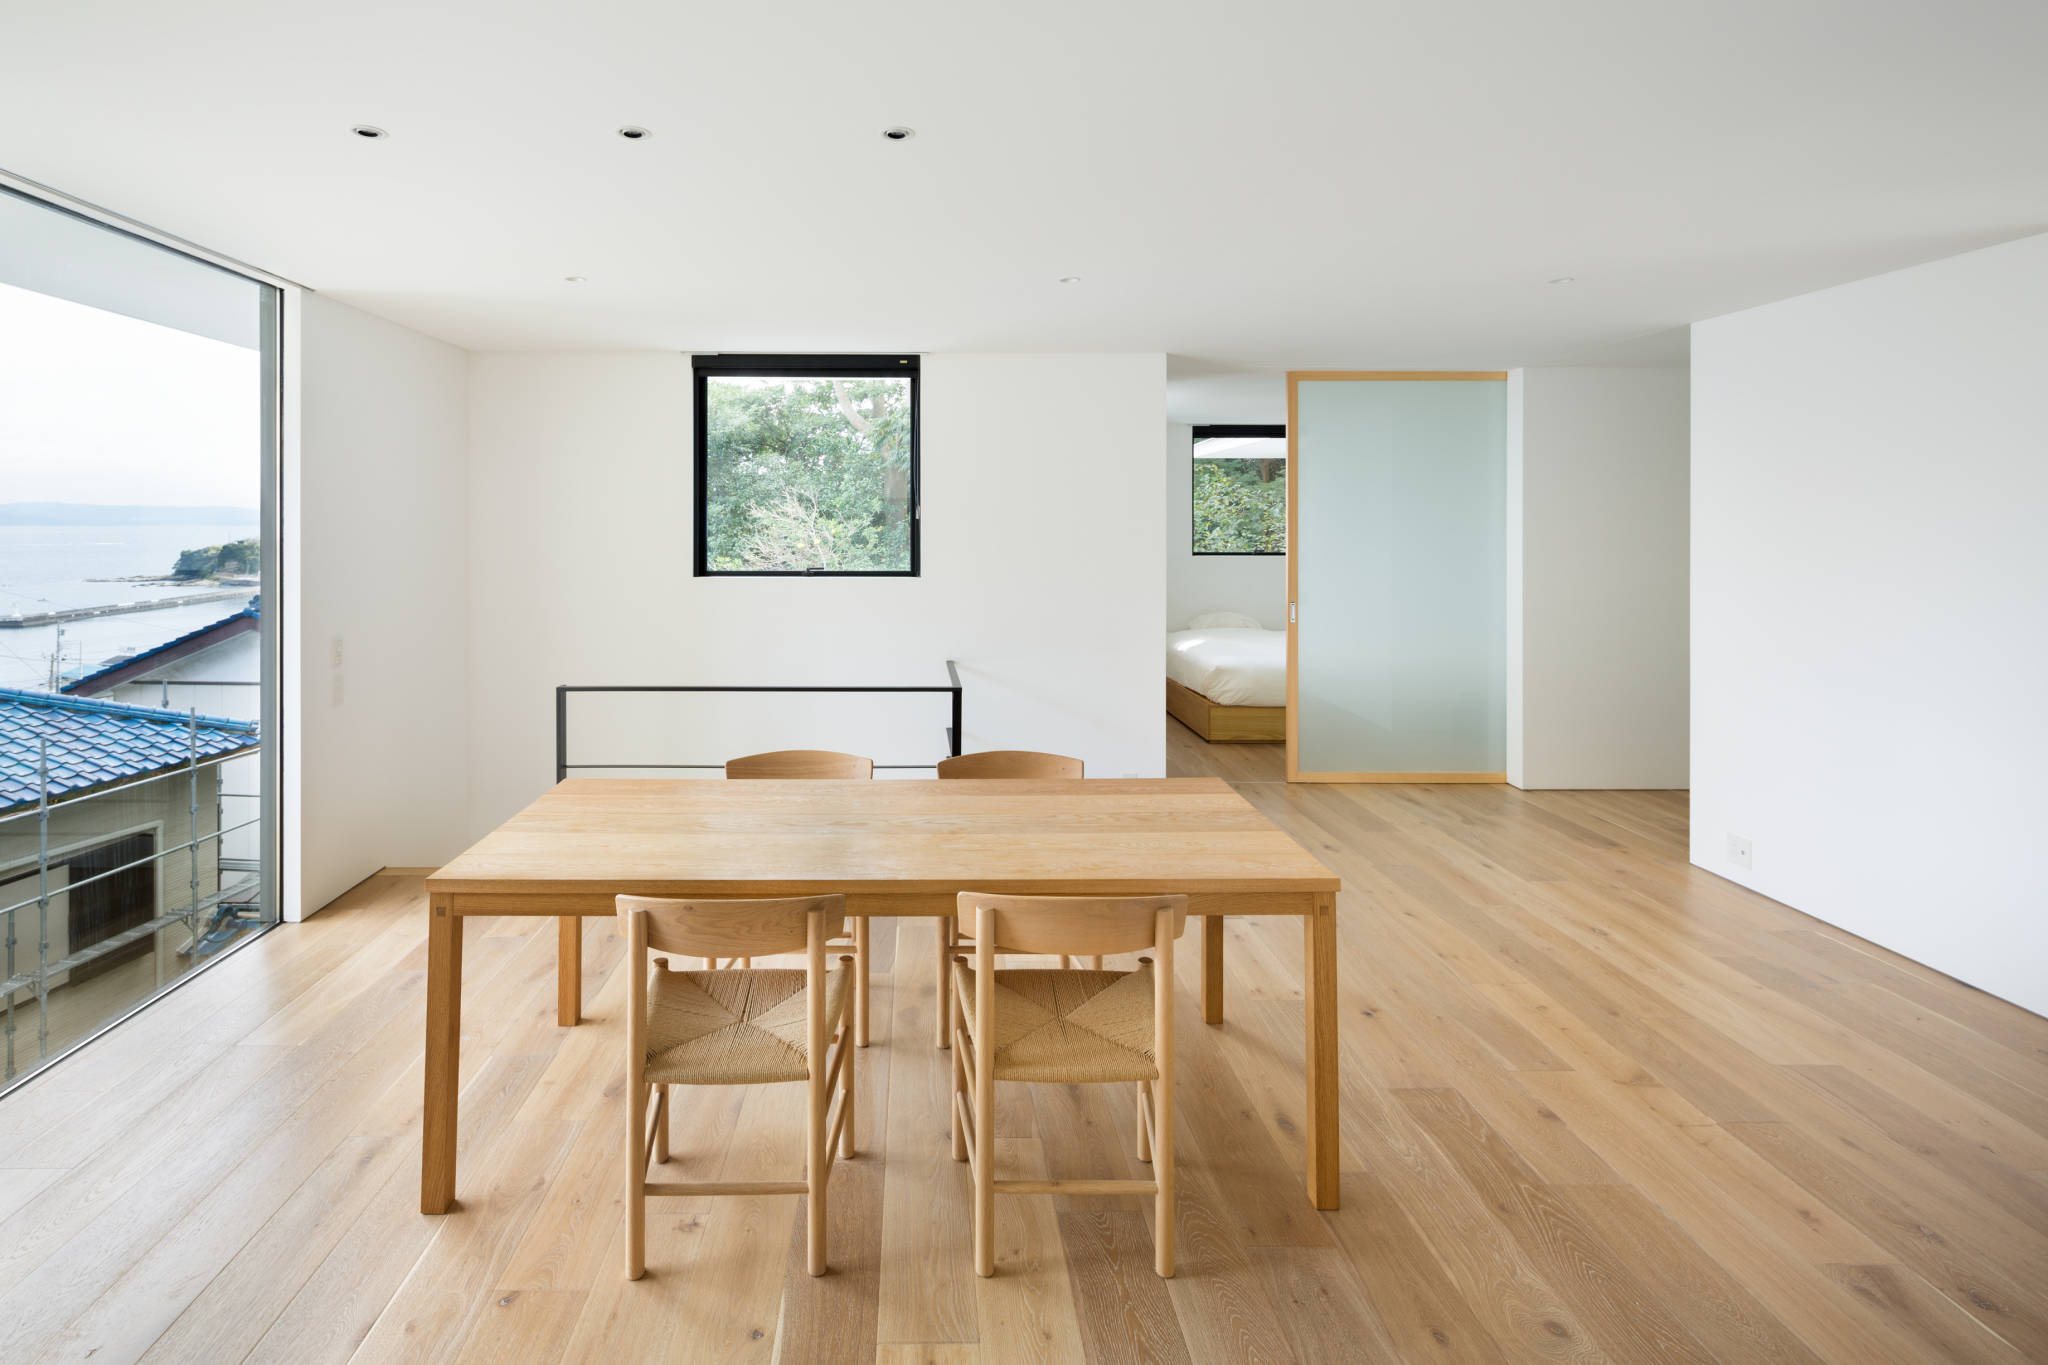 House in Yokosuka by Takashi Kurihara Architects